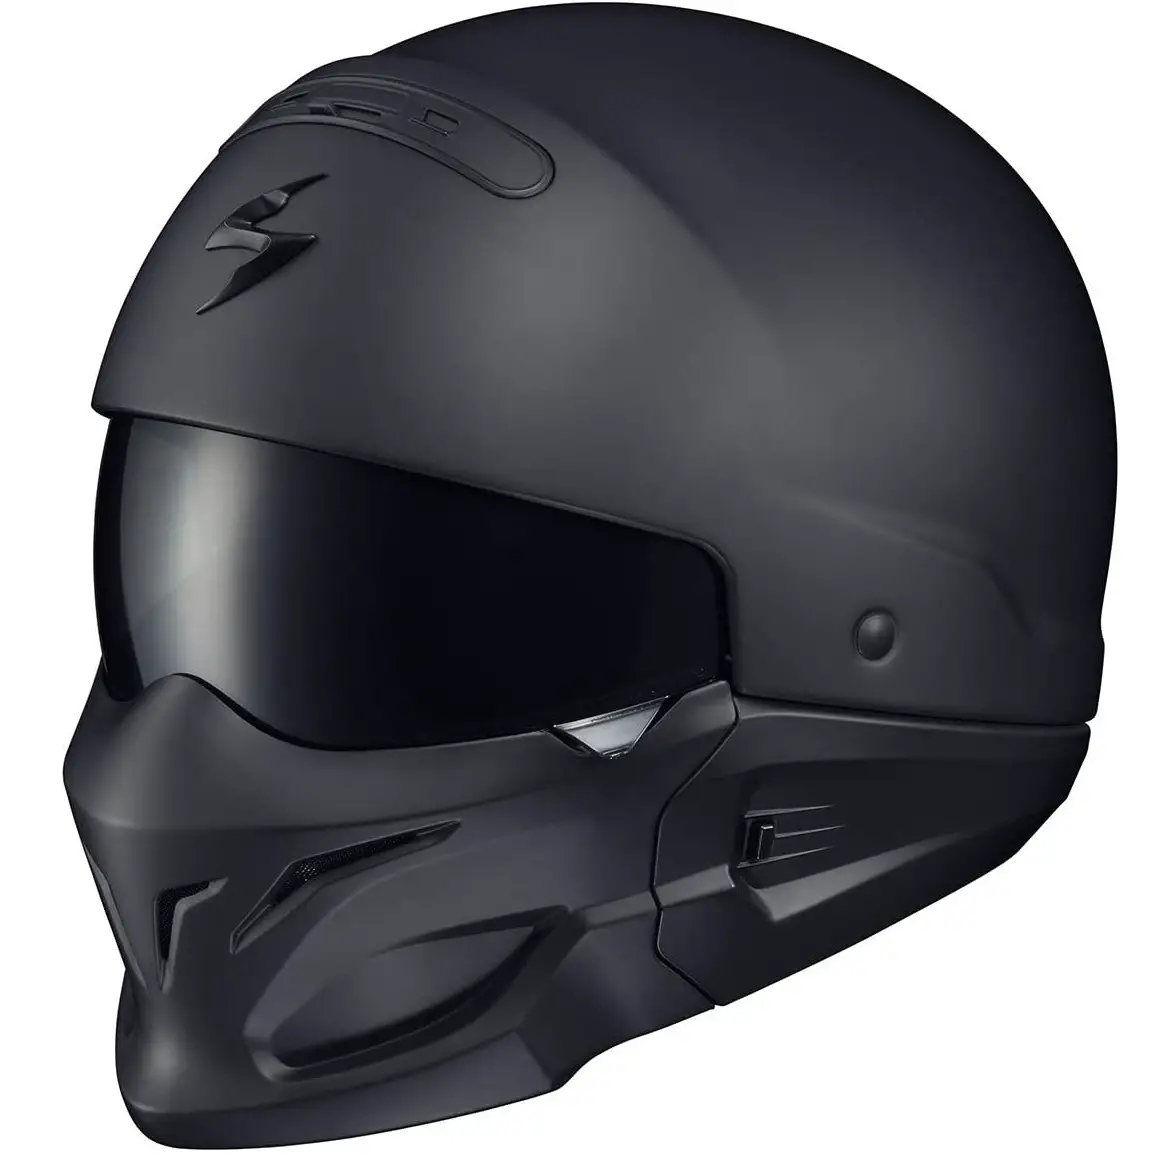 Top 5 Best Ventilated Motorcycle Helmets [2021 Review] - HelmetsGuide